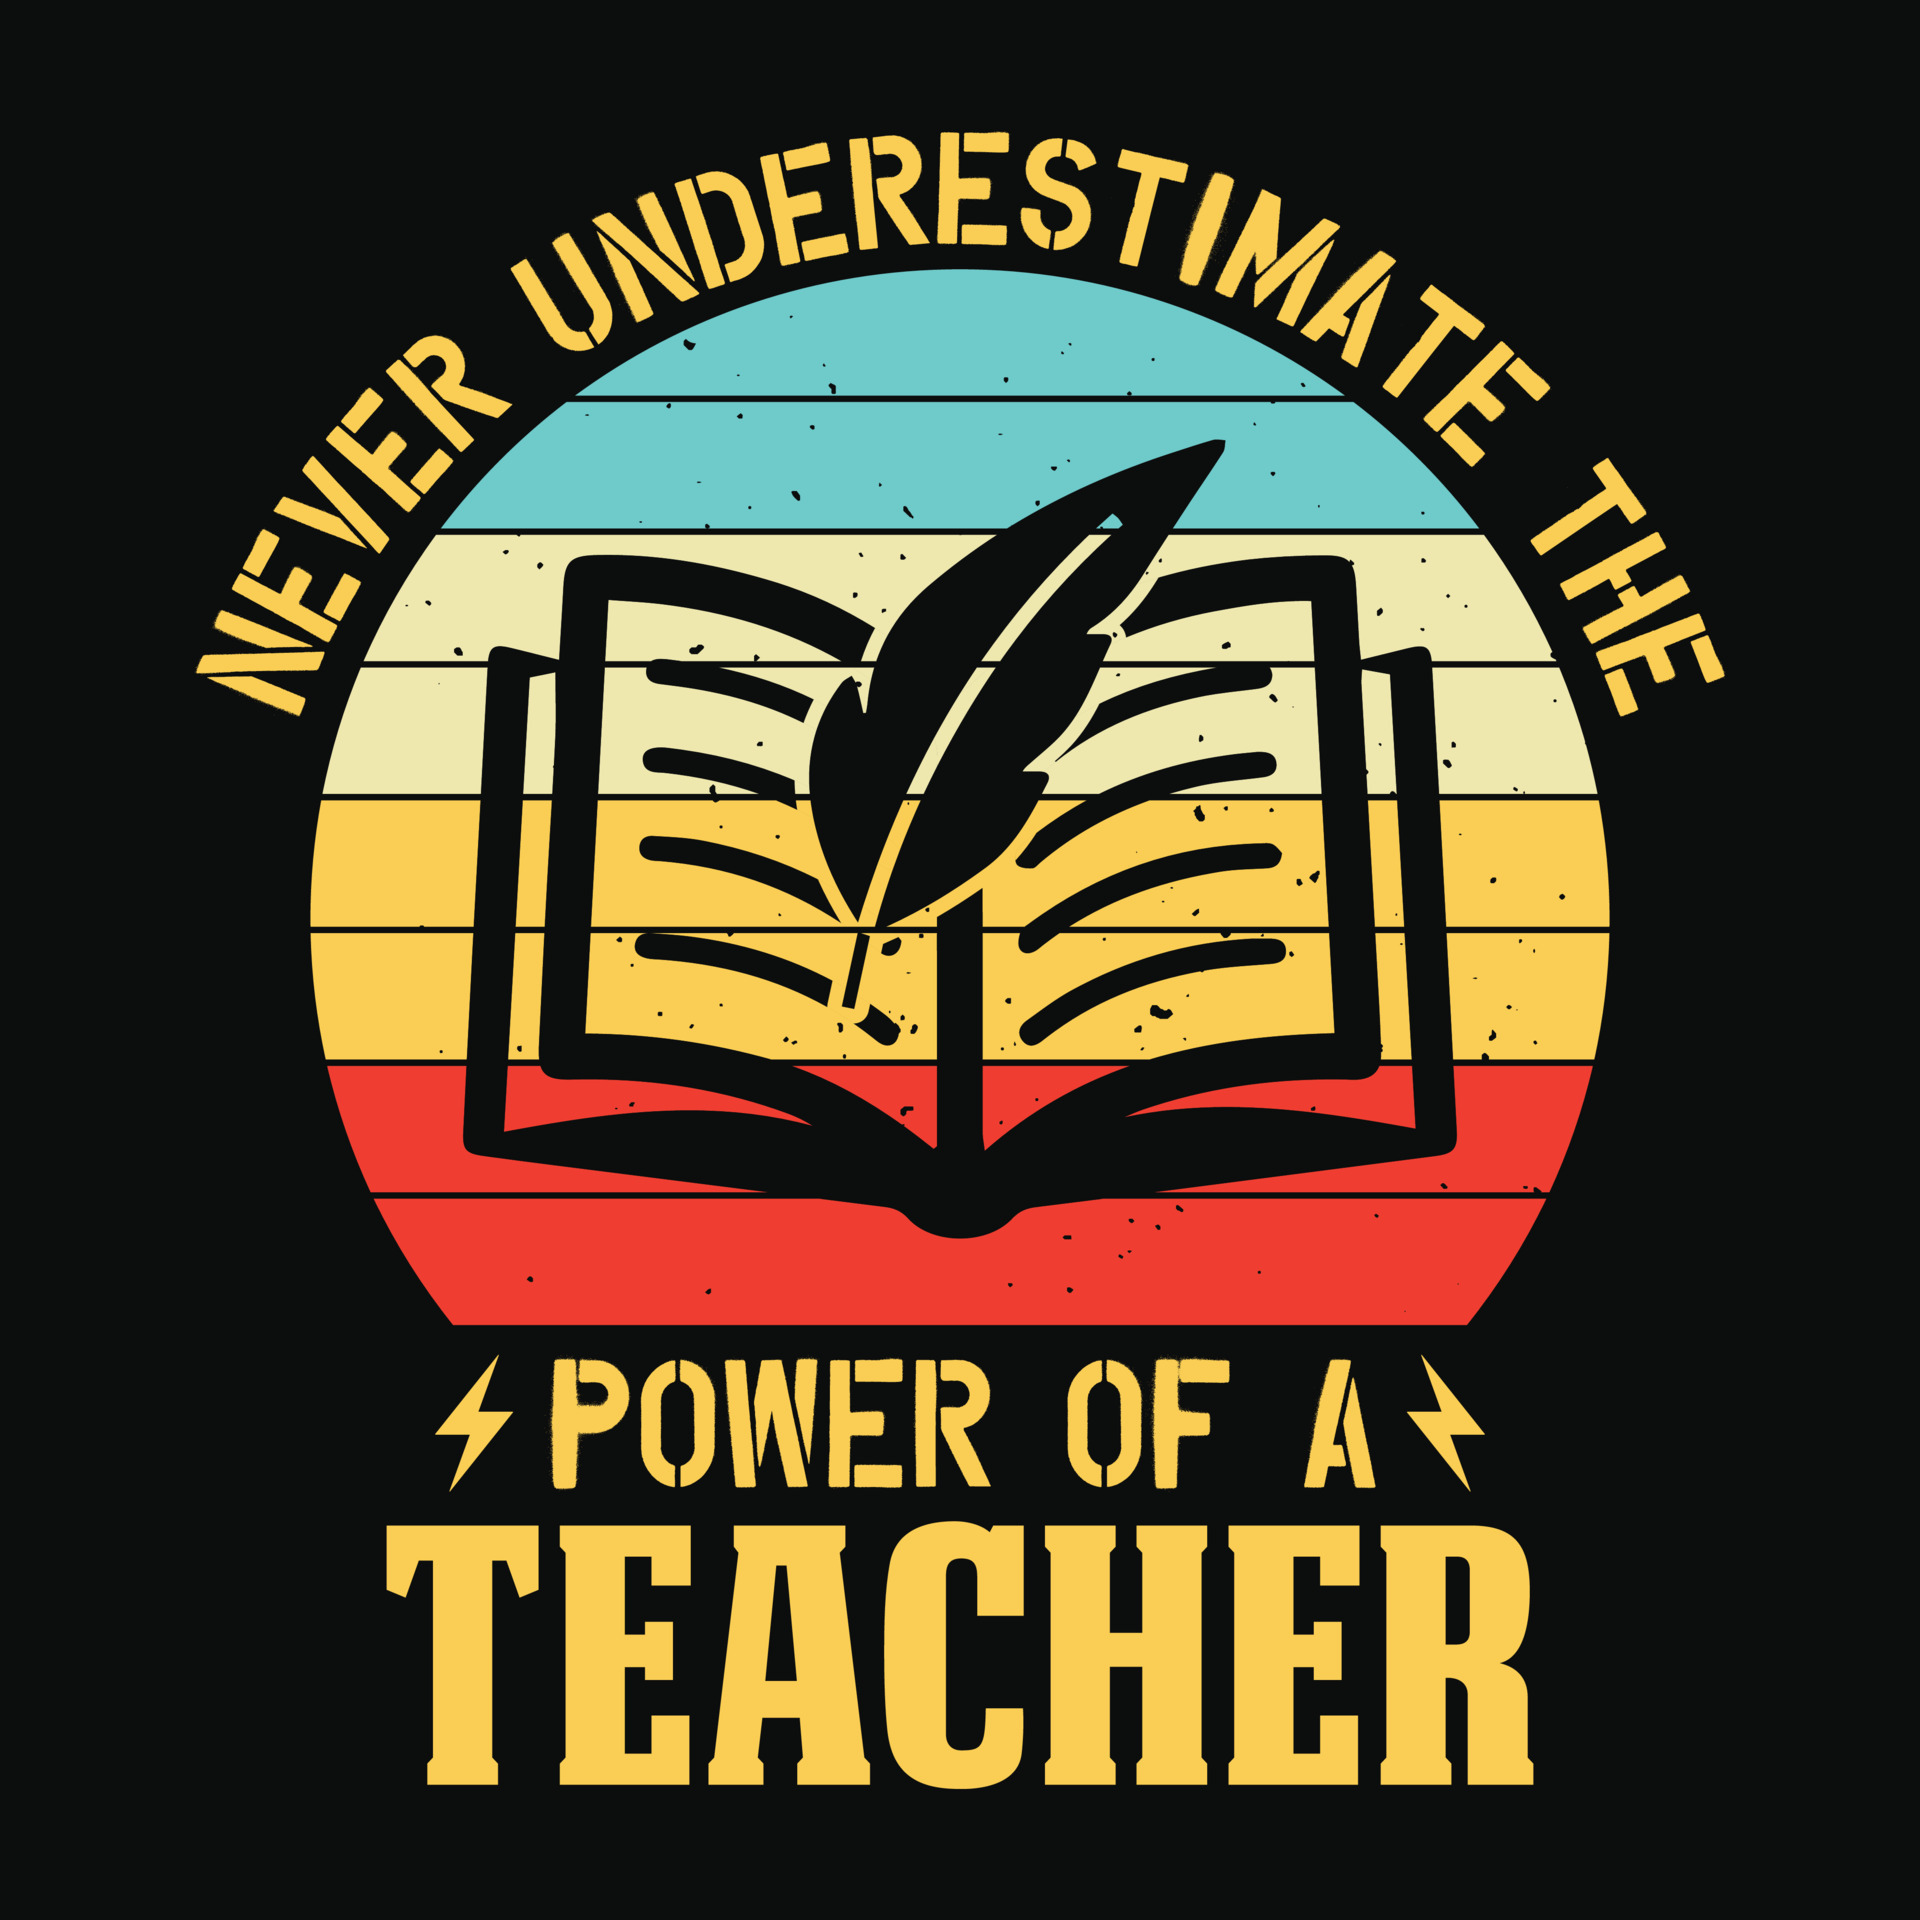 Teacher Logo Images – Browse 103,485 Stock Photos, Vectors, and Video |  Adobe Stock